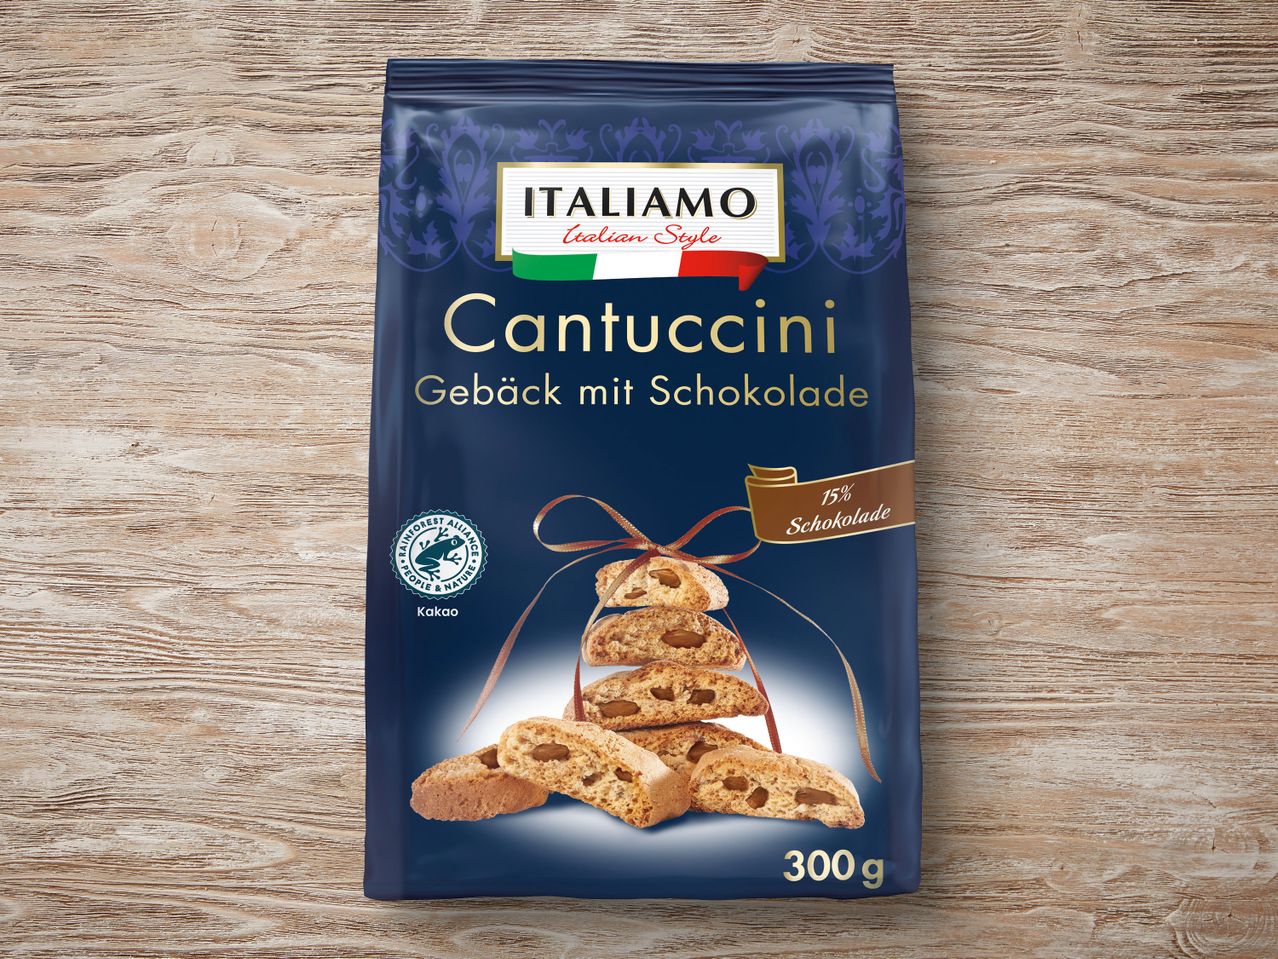 Absolut der günstigste Italiamo Cantuccini